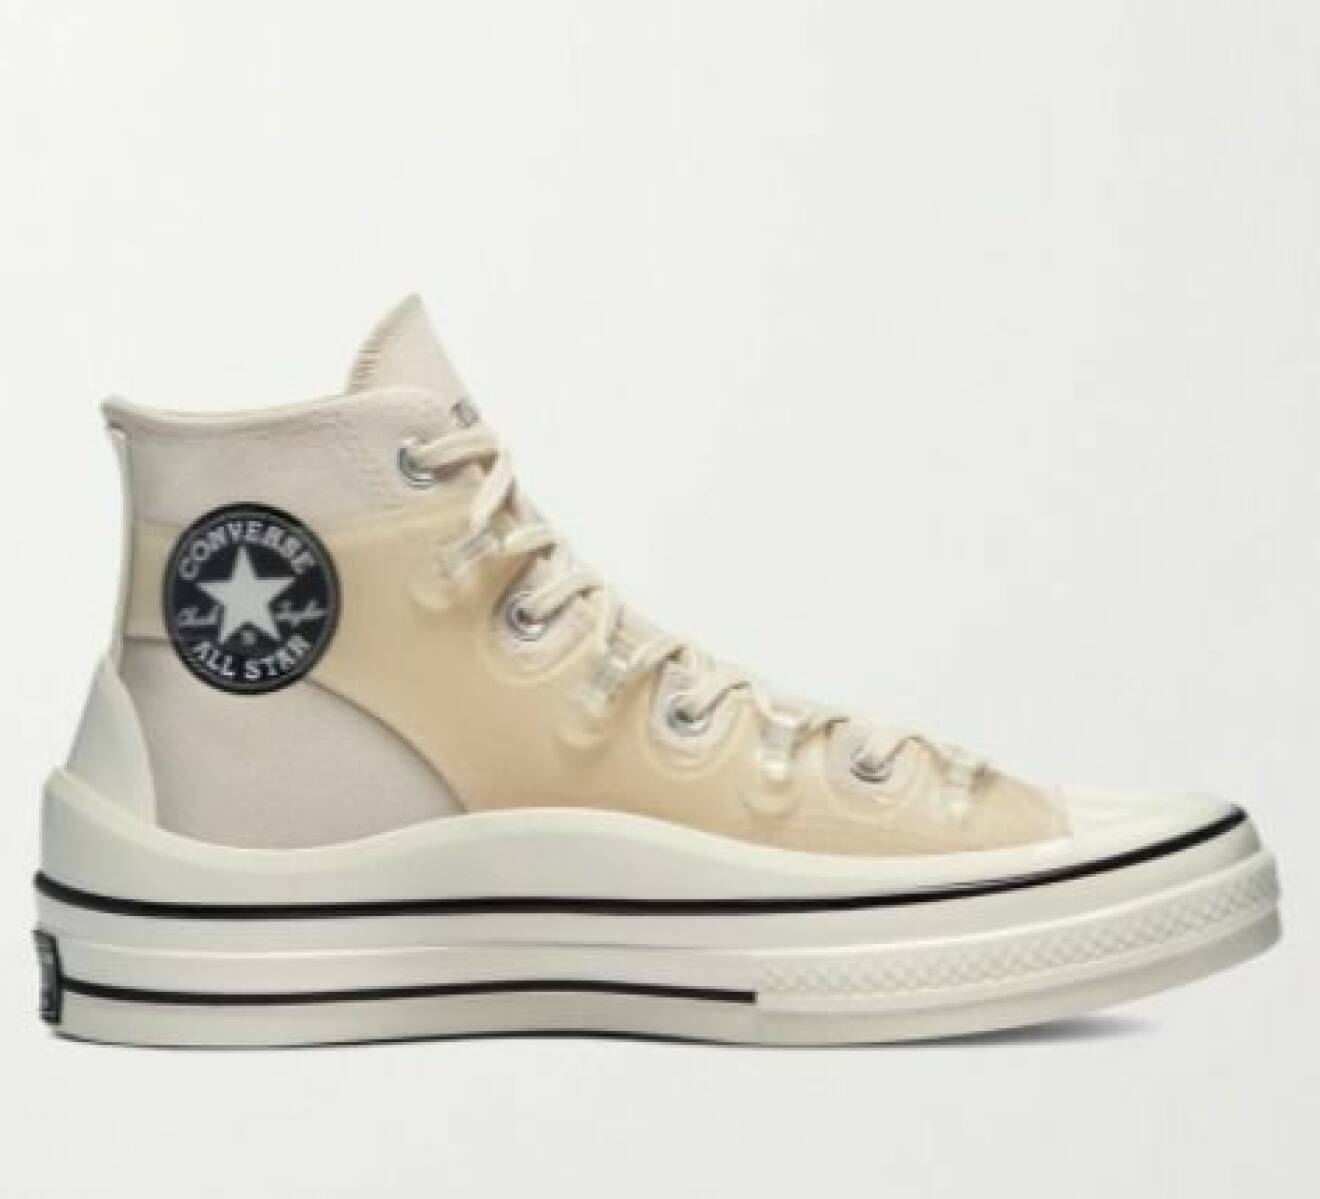 Beige / off-white sneakers i klassisk Converse-modell med chunky sula och transparenta detaljer. Sneakers från Converse.